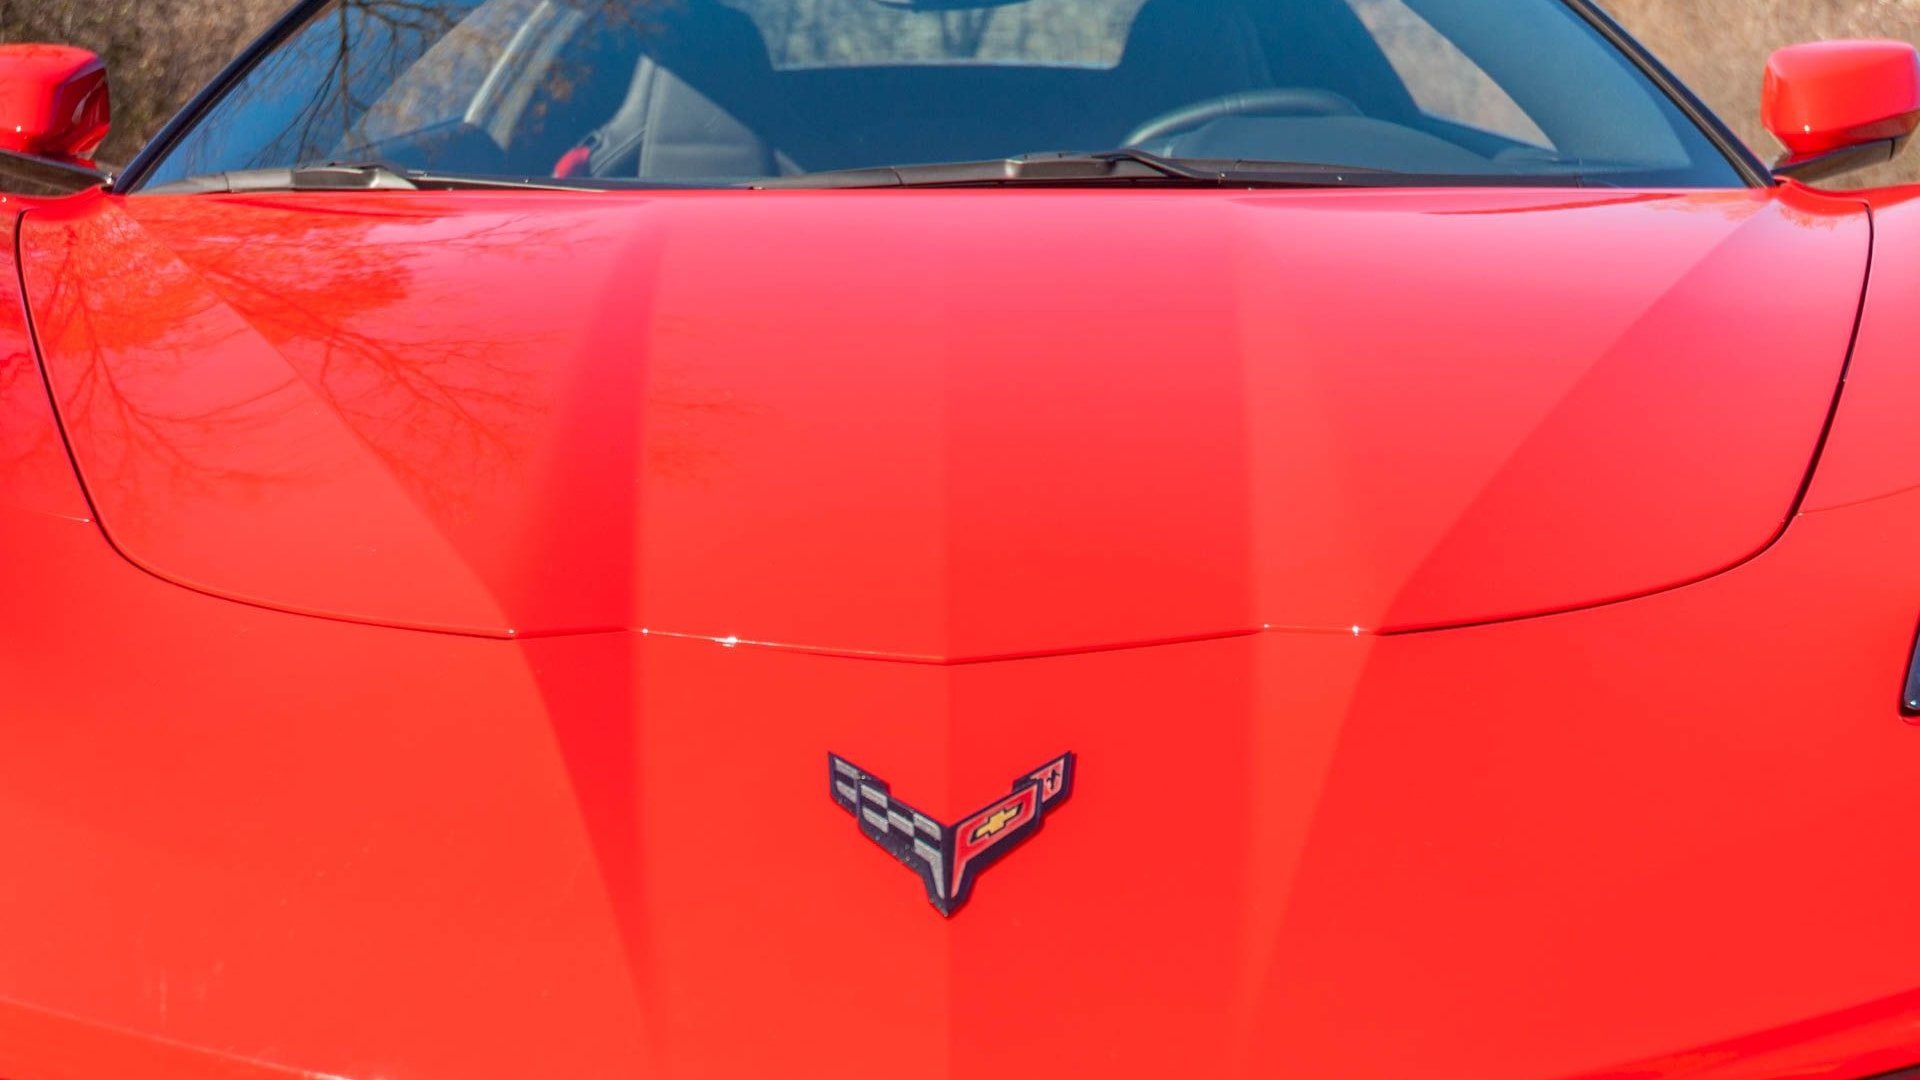 2020 Chevrolet Corvette convertible